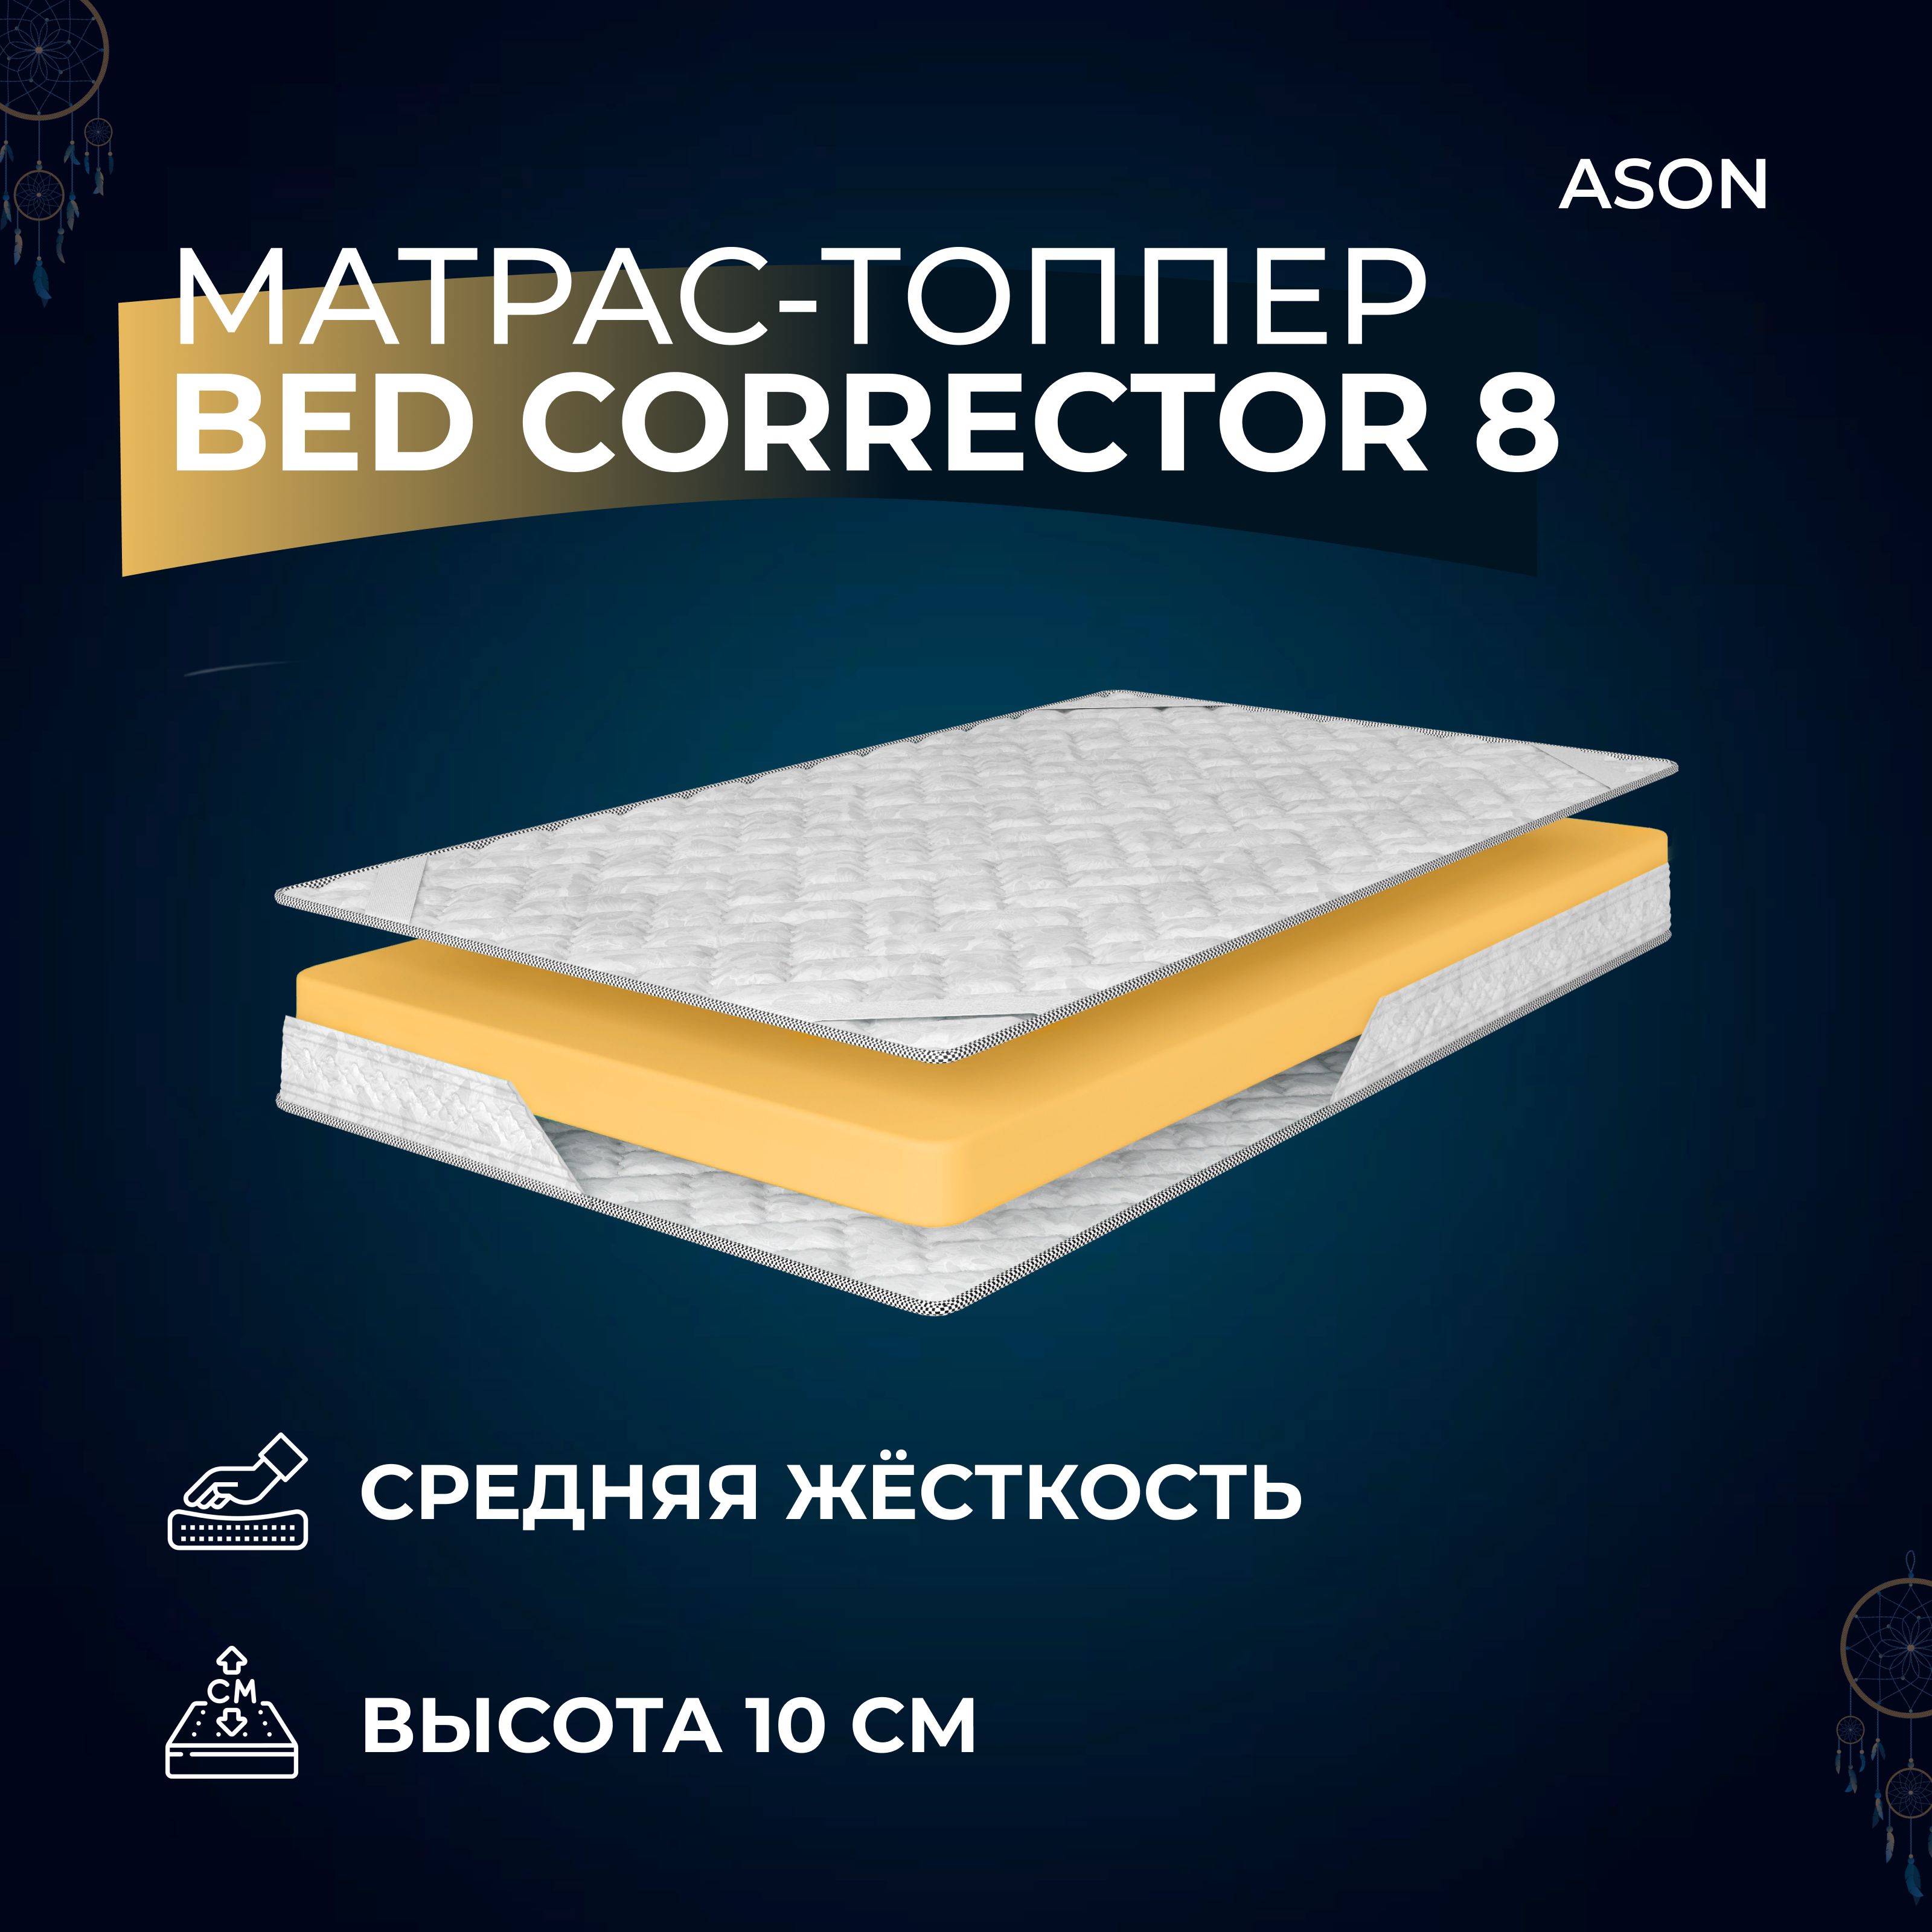 Матрас-топпер 80х200 Ason, Bed corrector 8